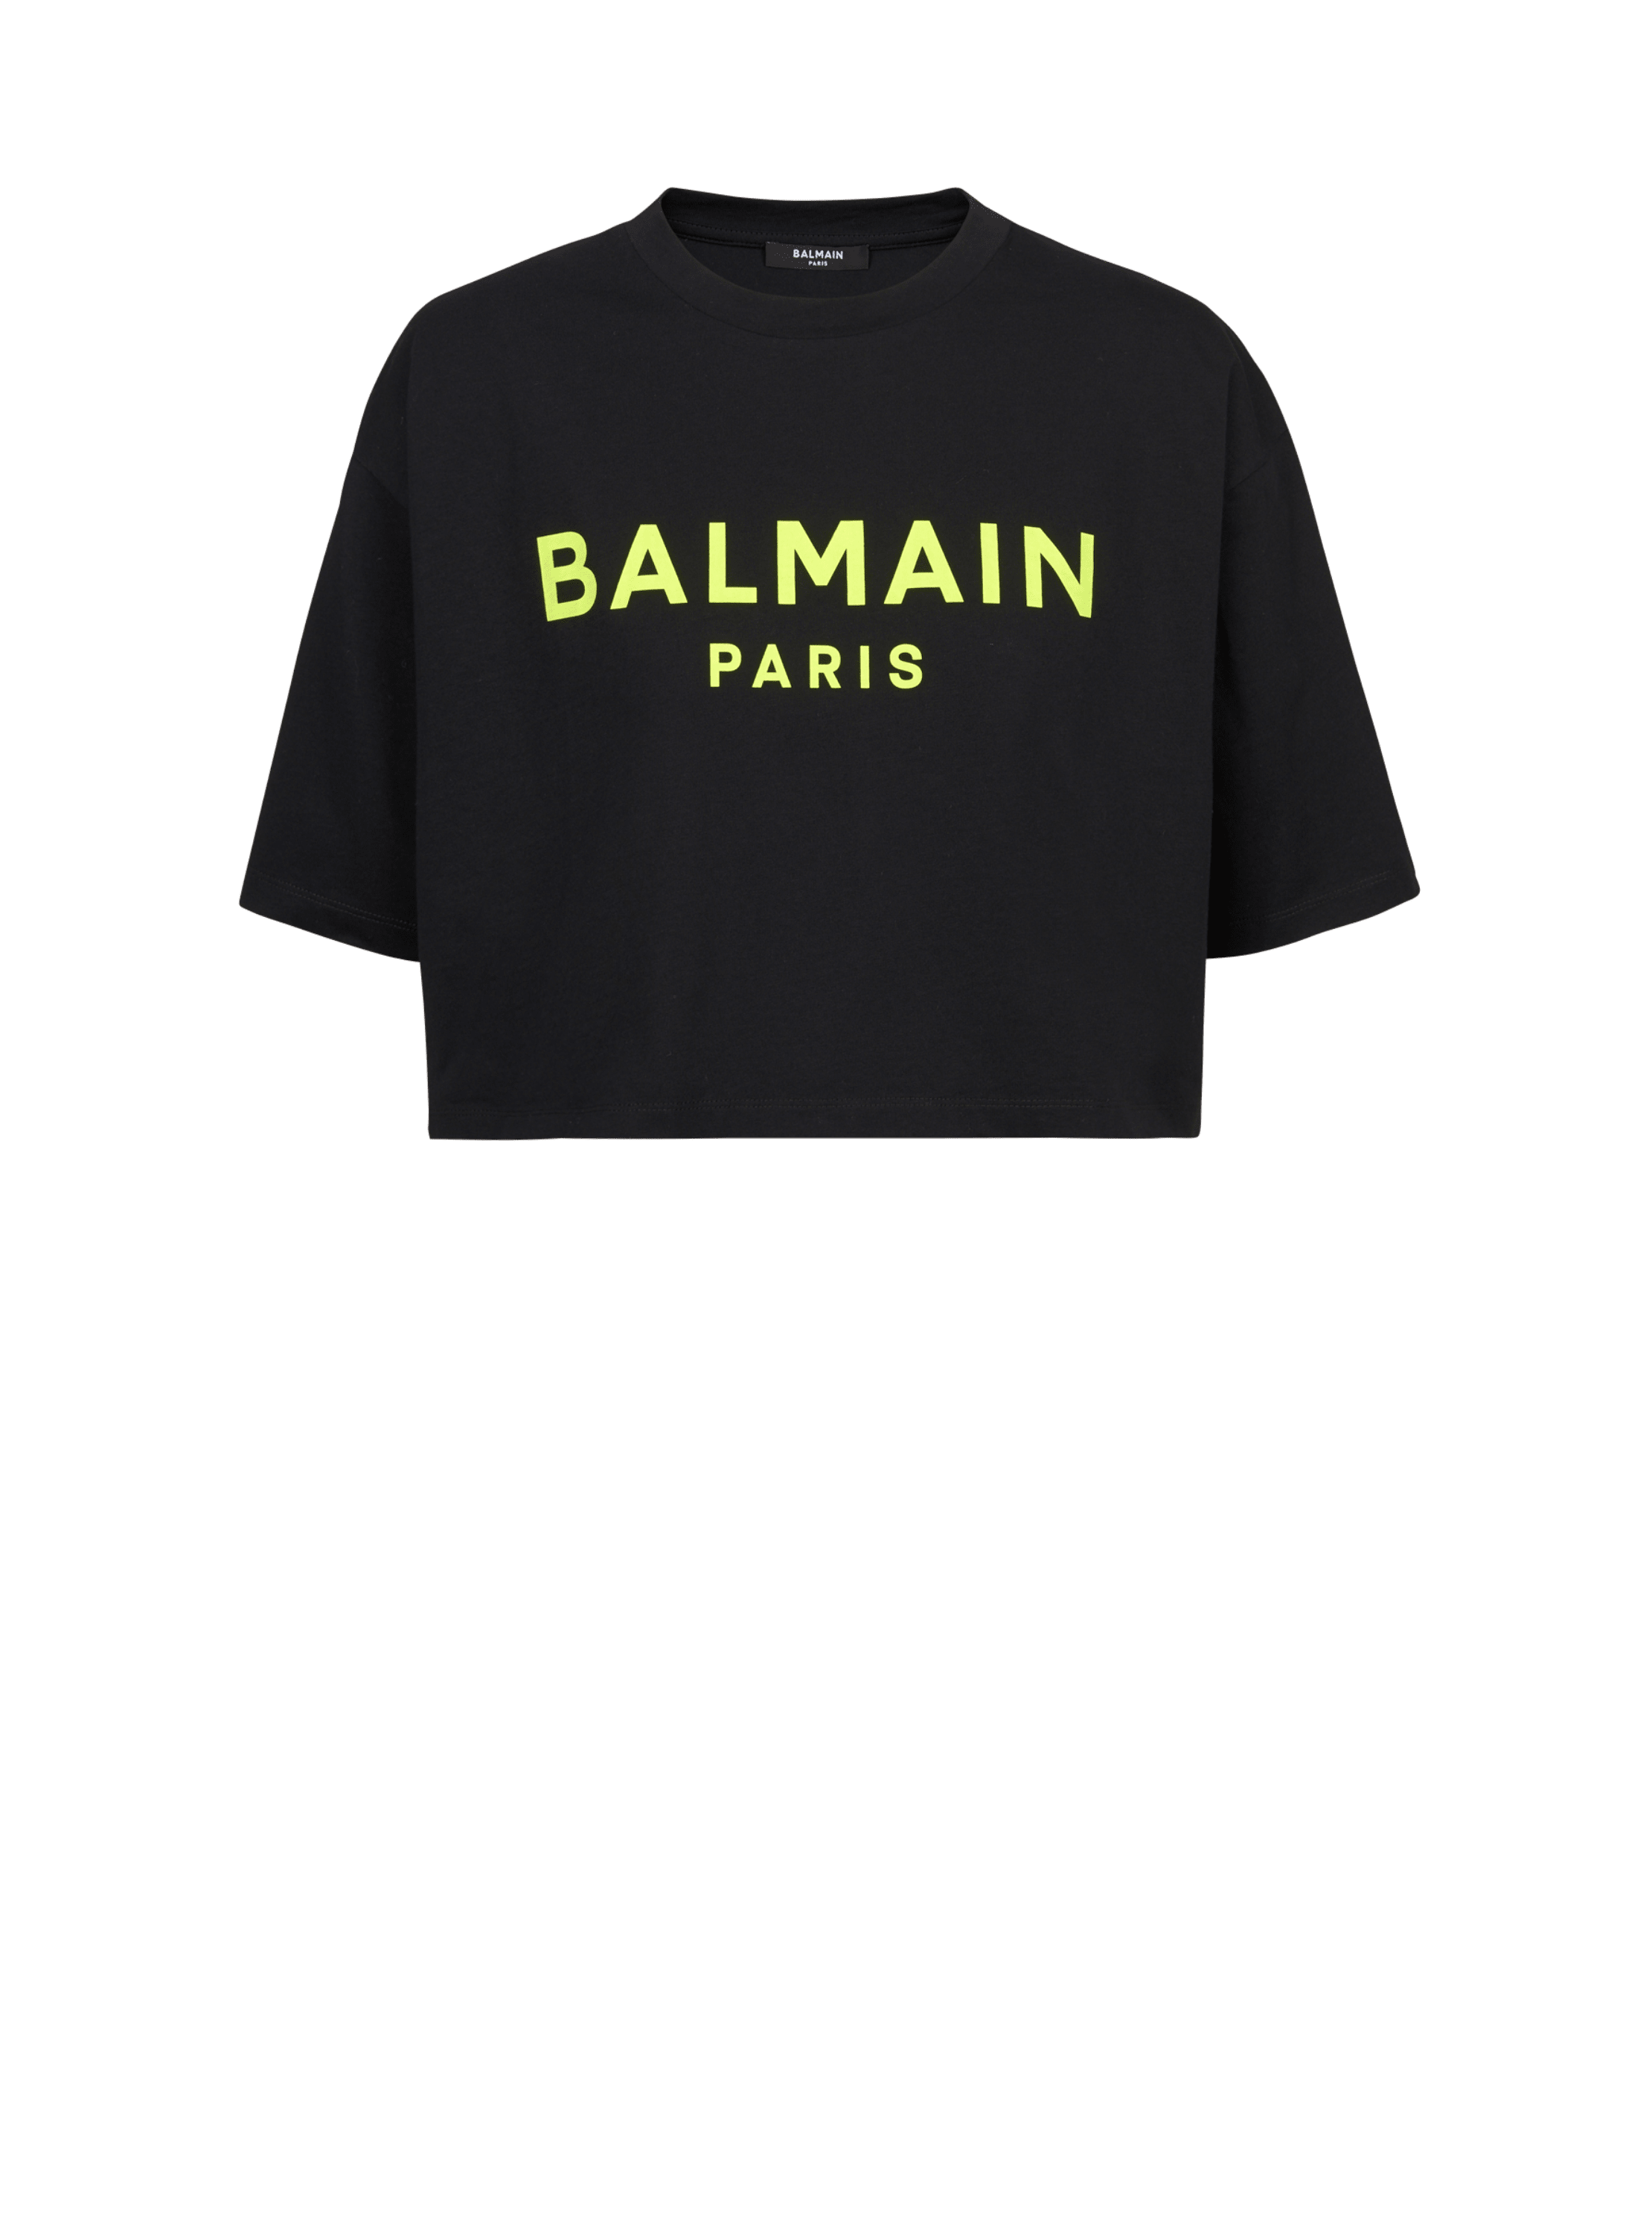 EXCLUSIF - T-shirt court en coton imprimé logo Balmain, jaune, hi-res